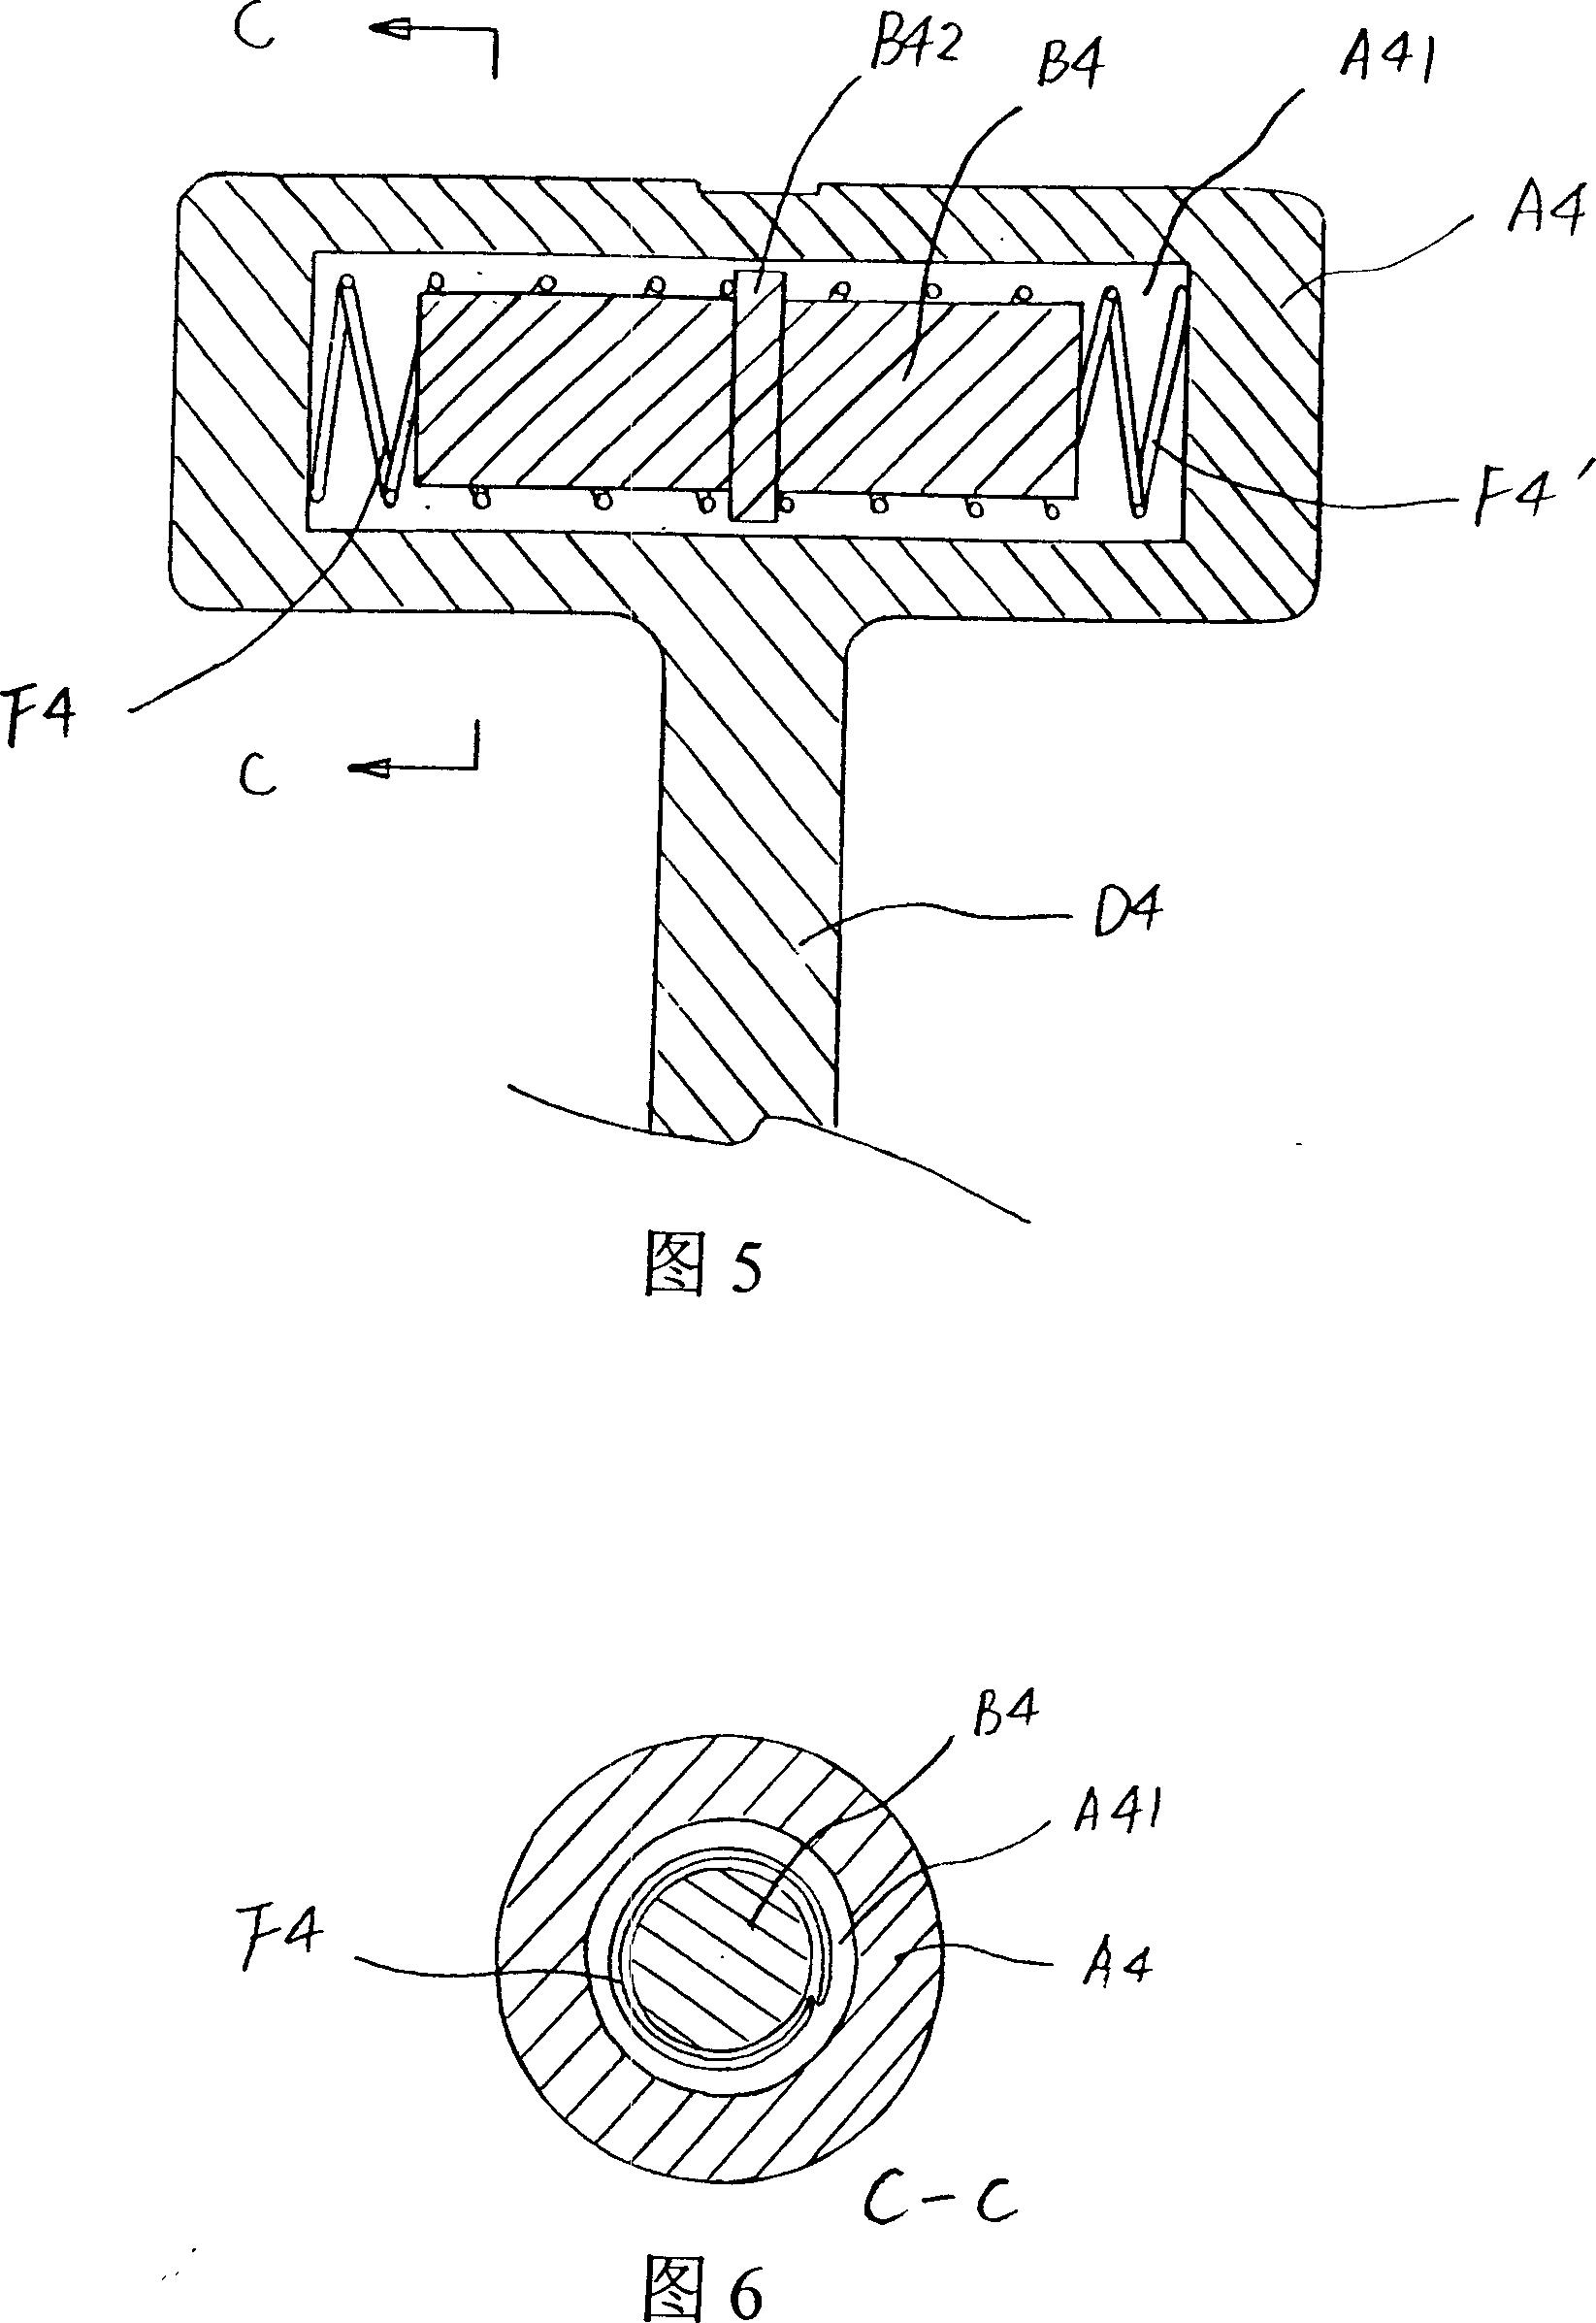 Double-beat hammer mechanism